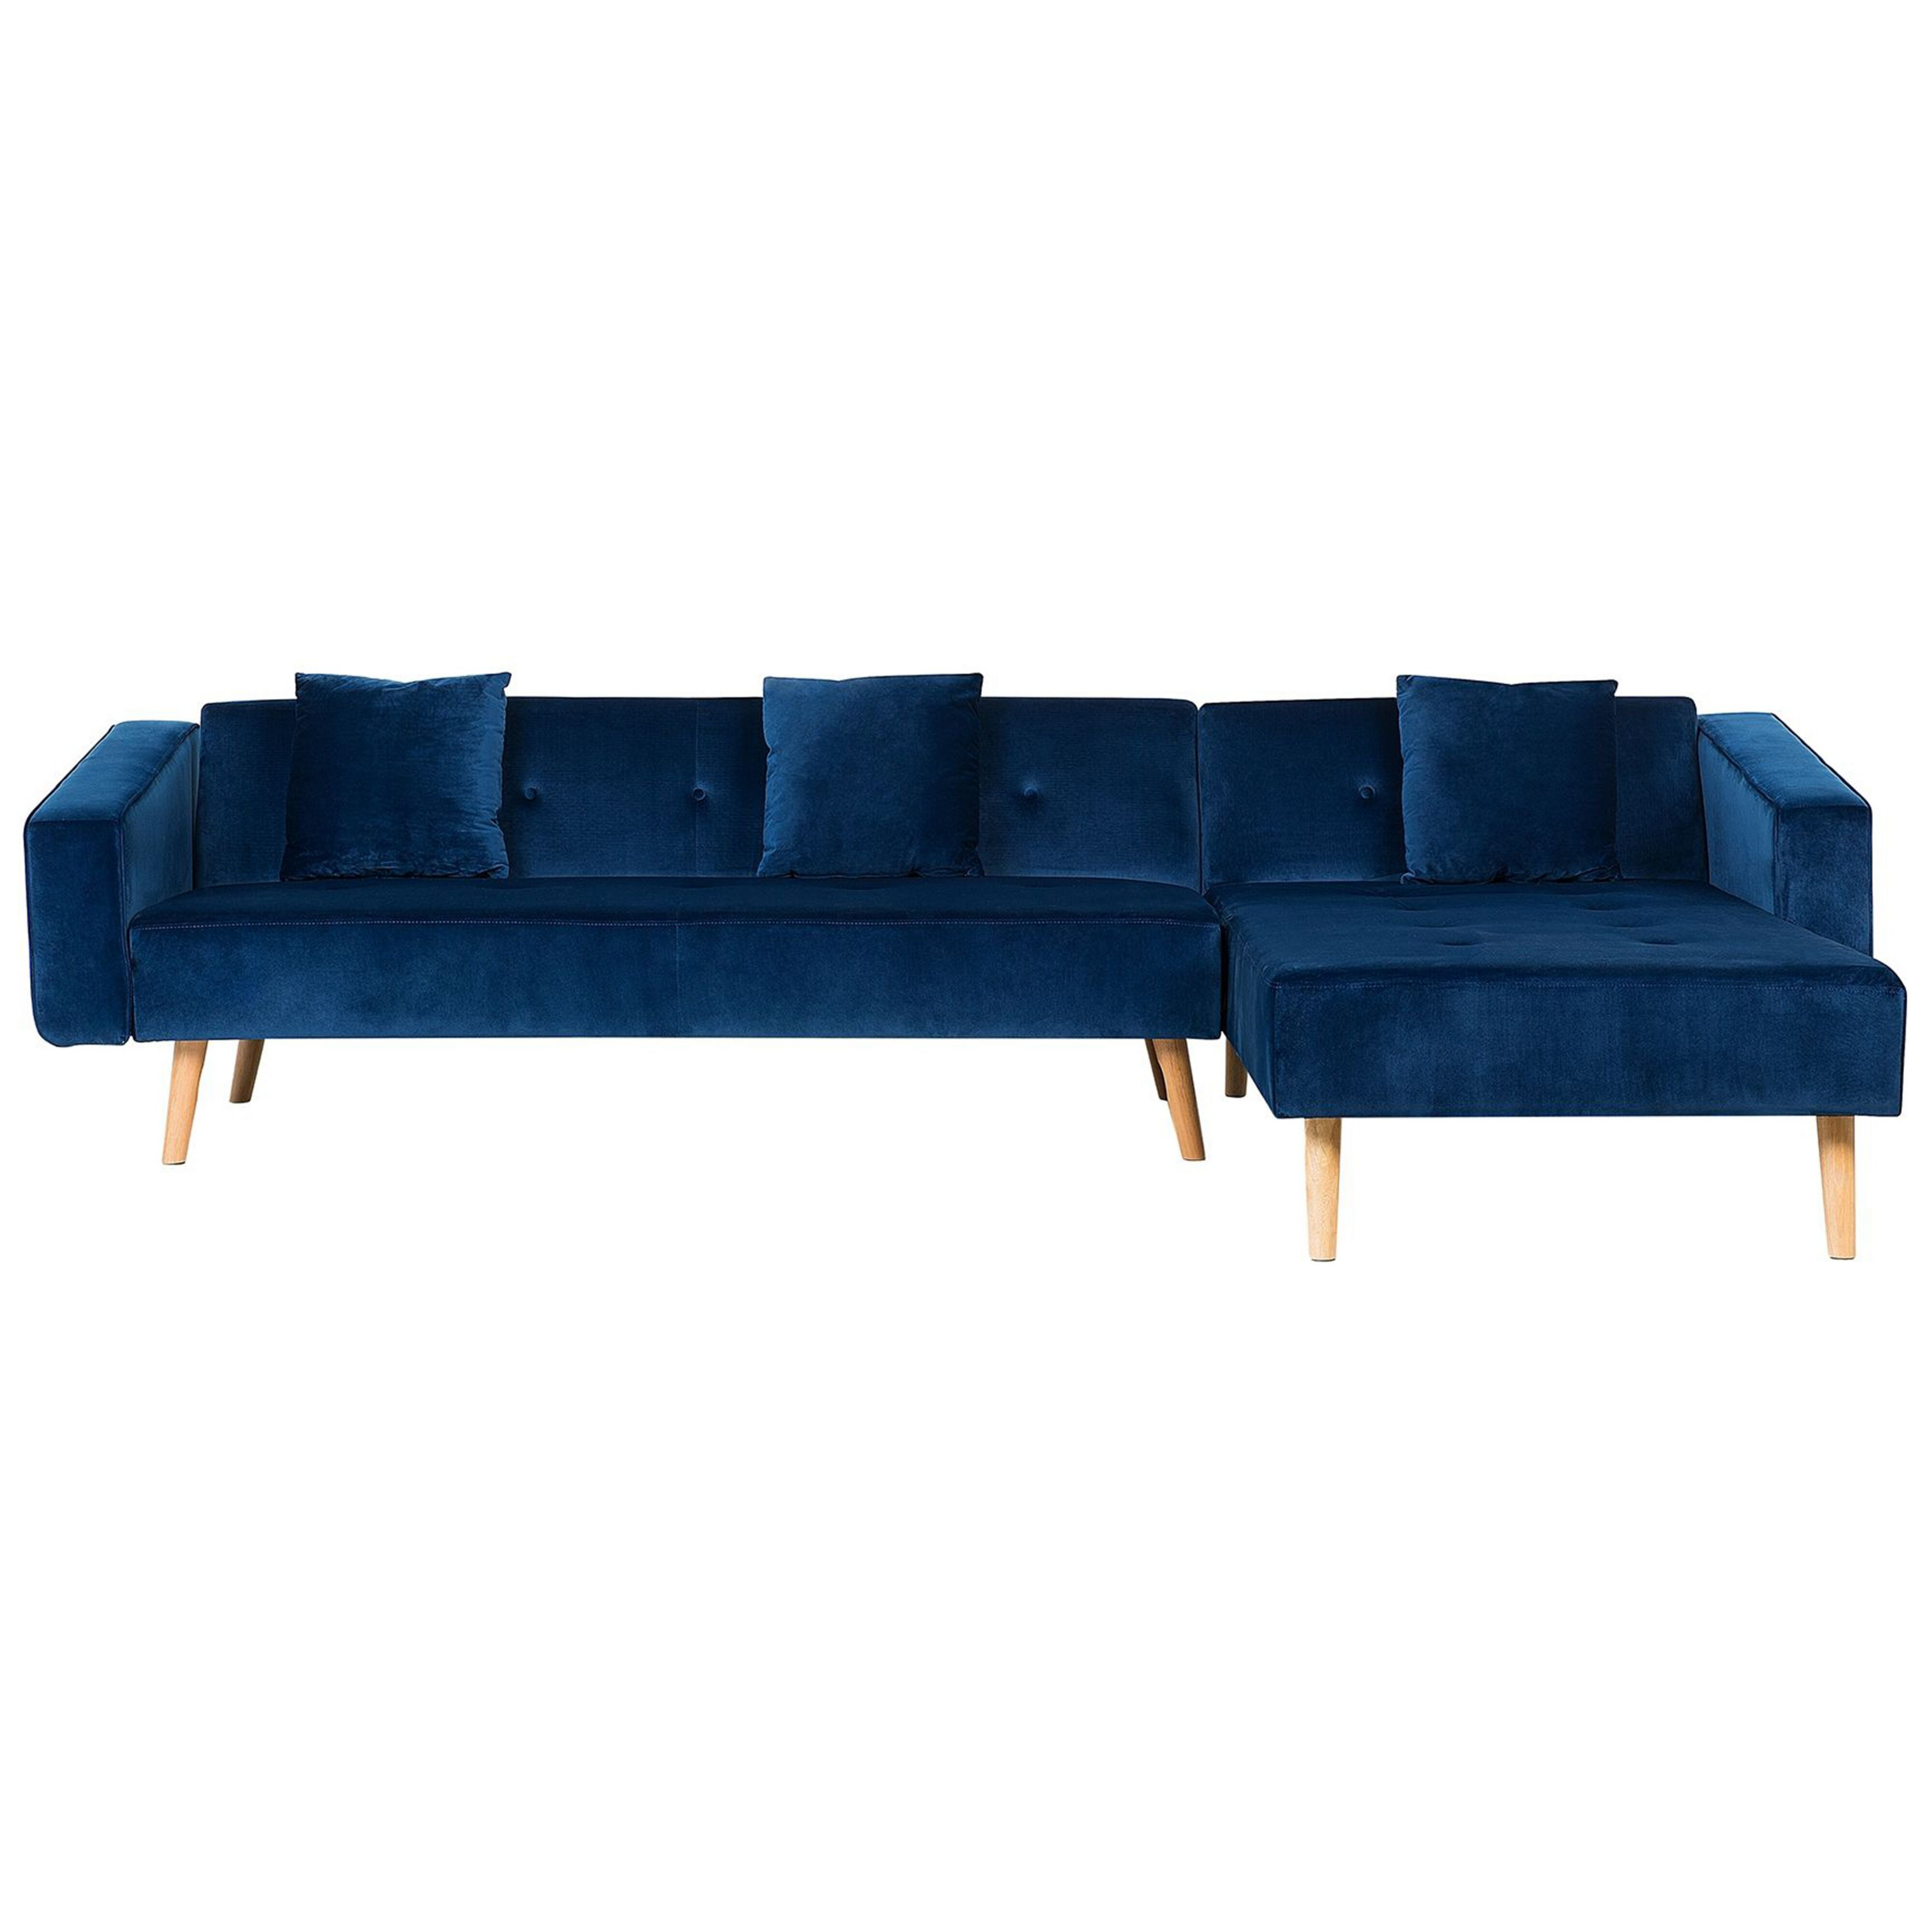 Beliani Corner Sofa Bed with 3 Pillows Blue Velvet Upholsery Light Wood Legs Reclining Left Hand Chaise Longue 4 Seater